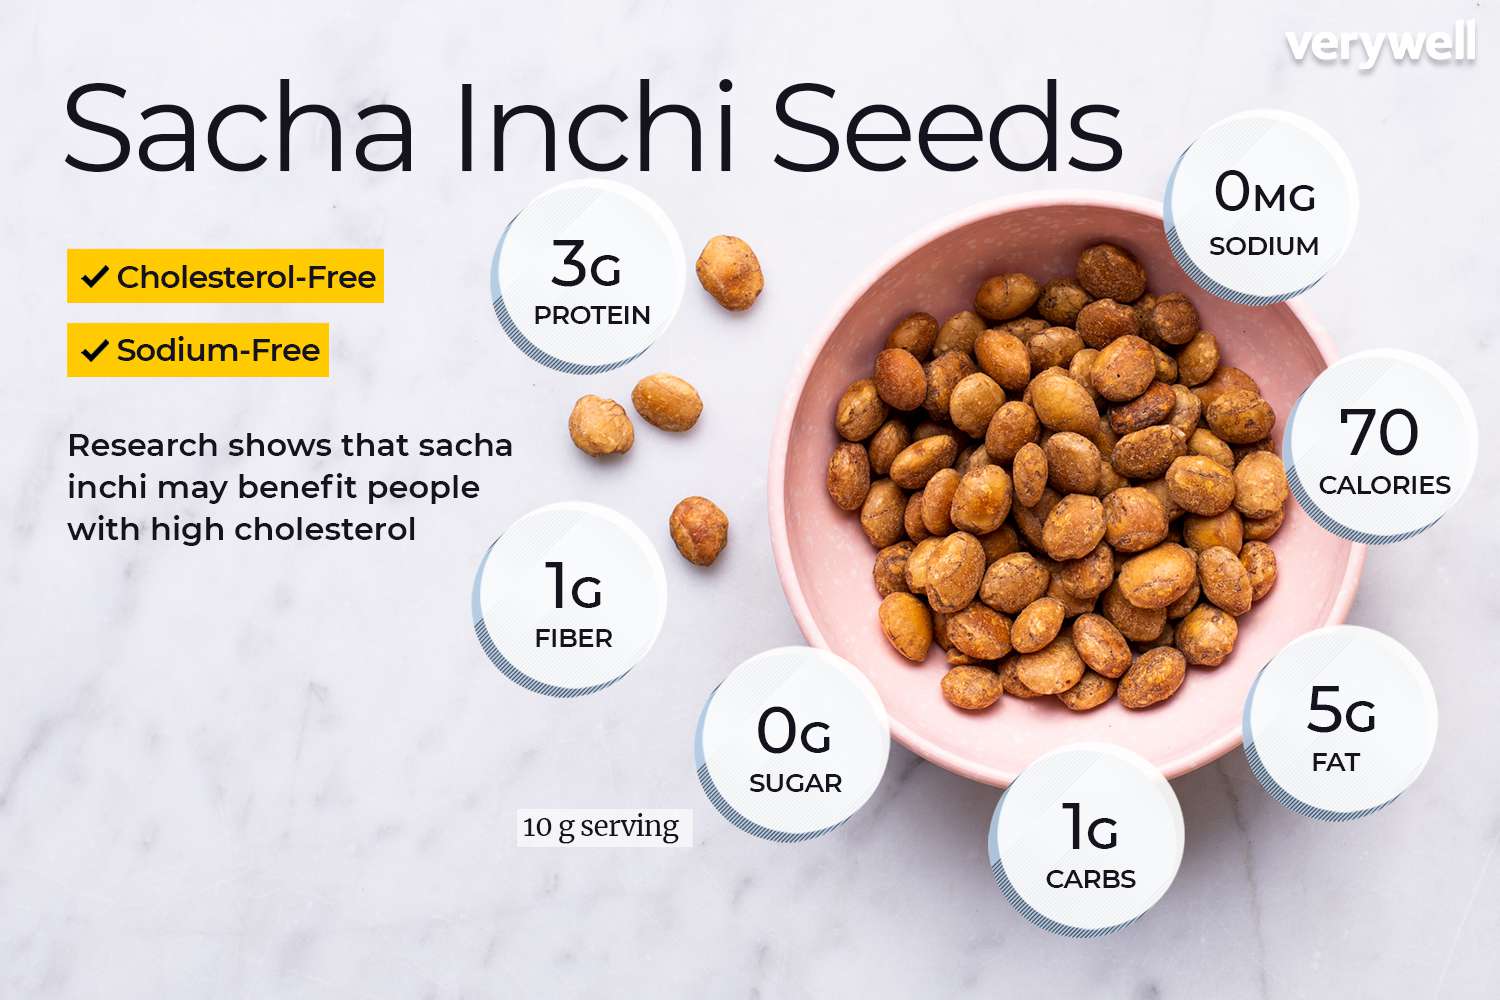 Sacha inchi nutrition facts